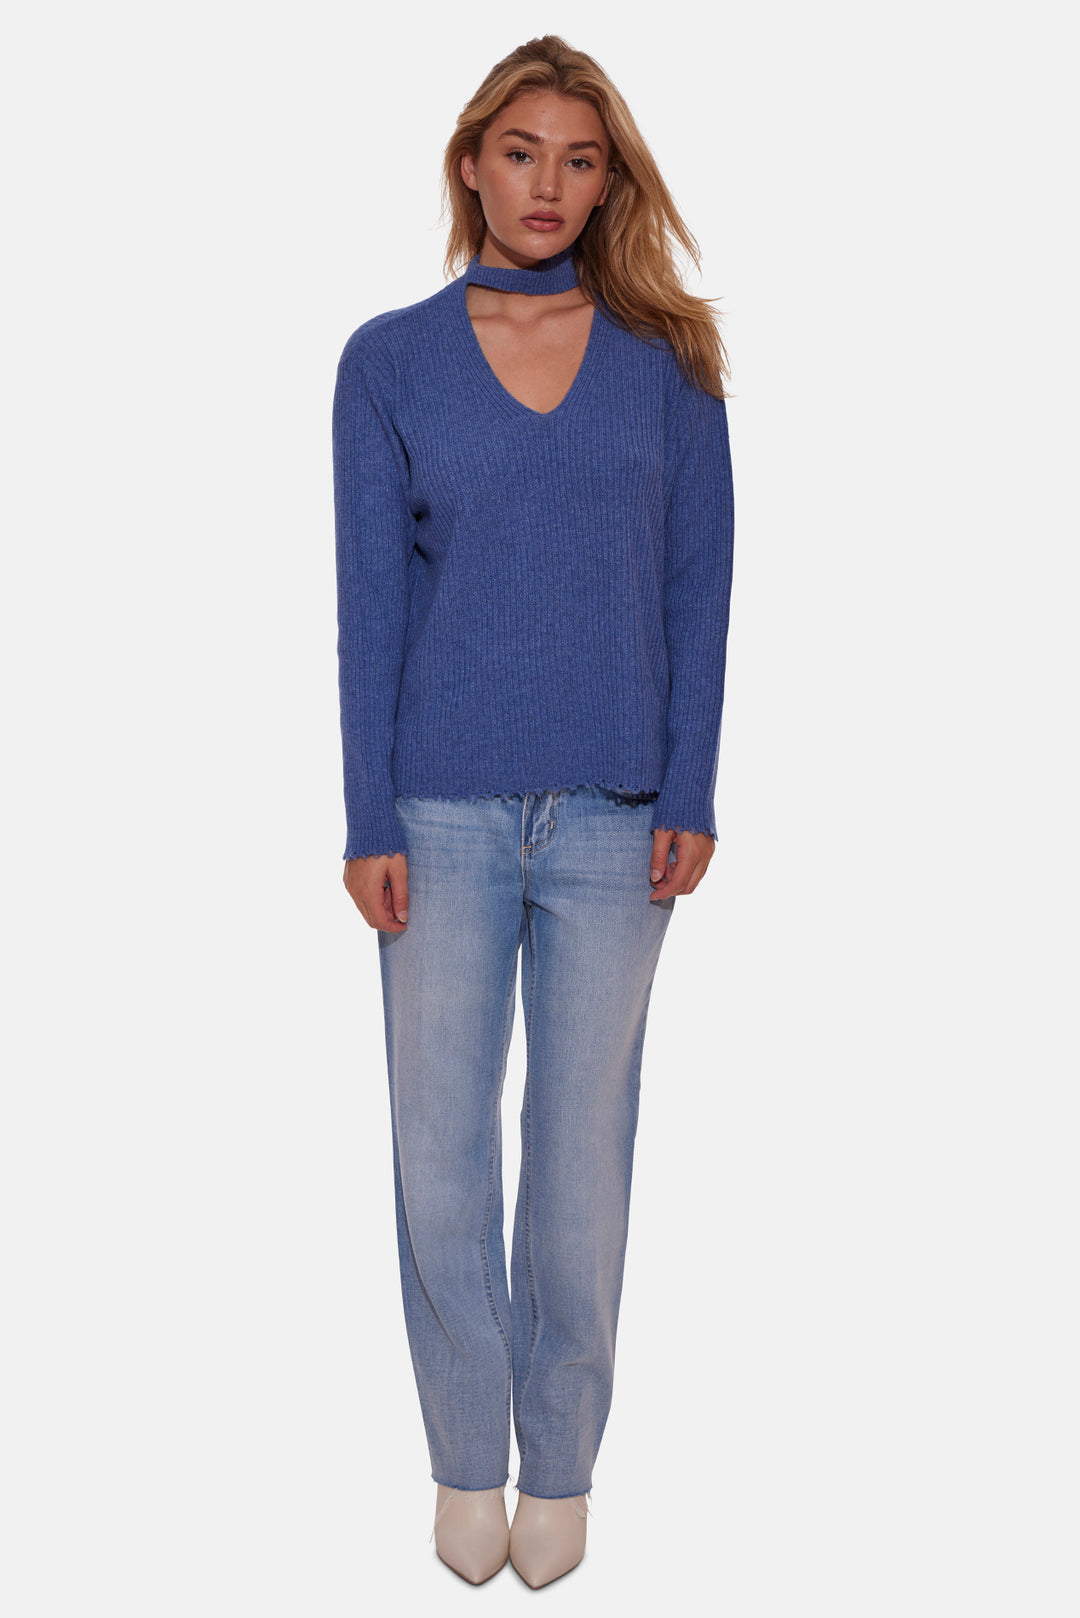 Taylor Cashmere Choker V Neck Sweater Blue Jean